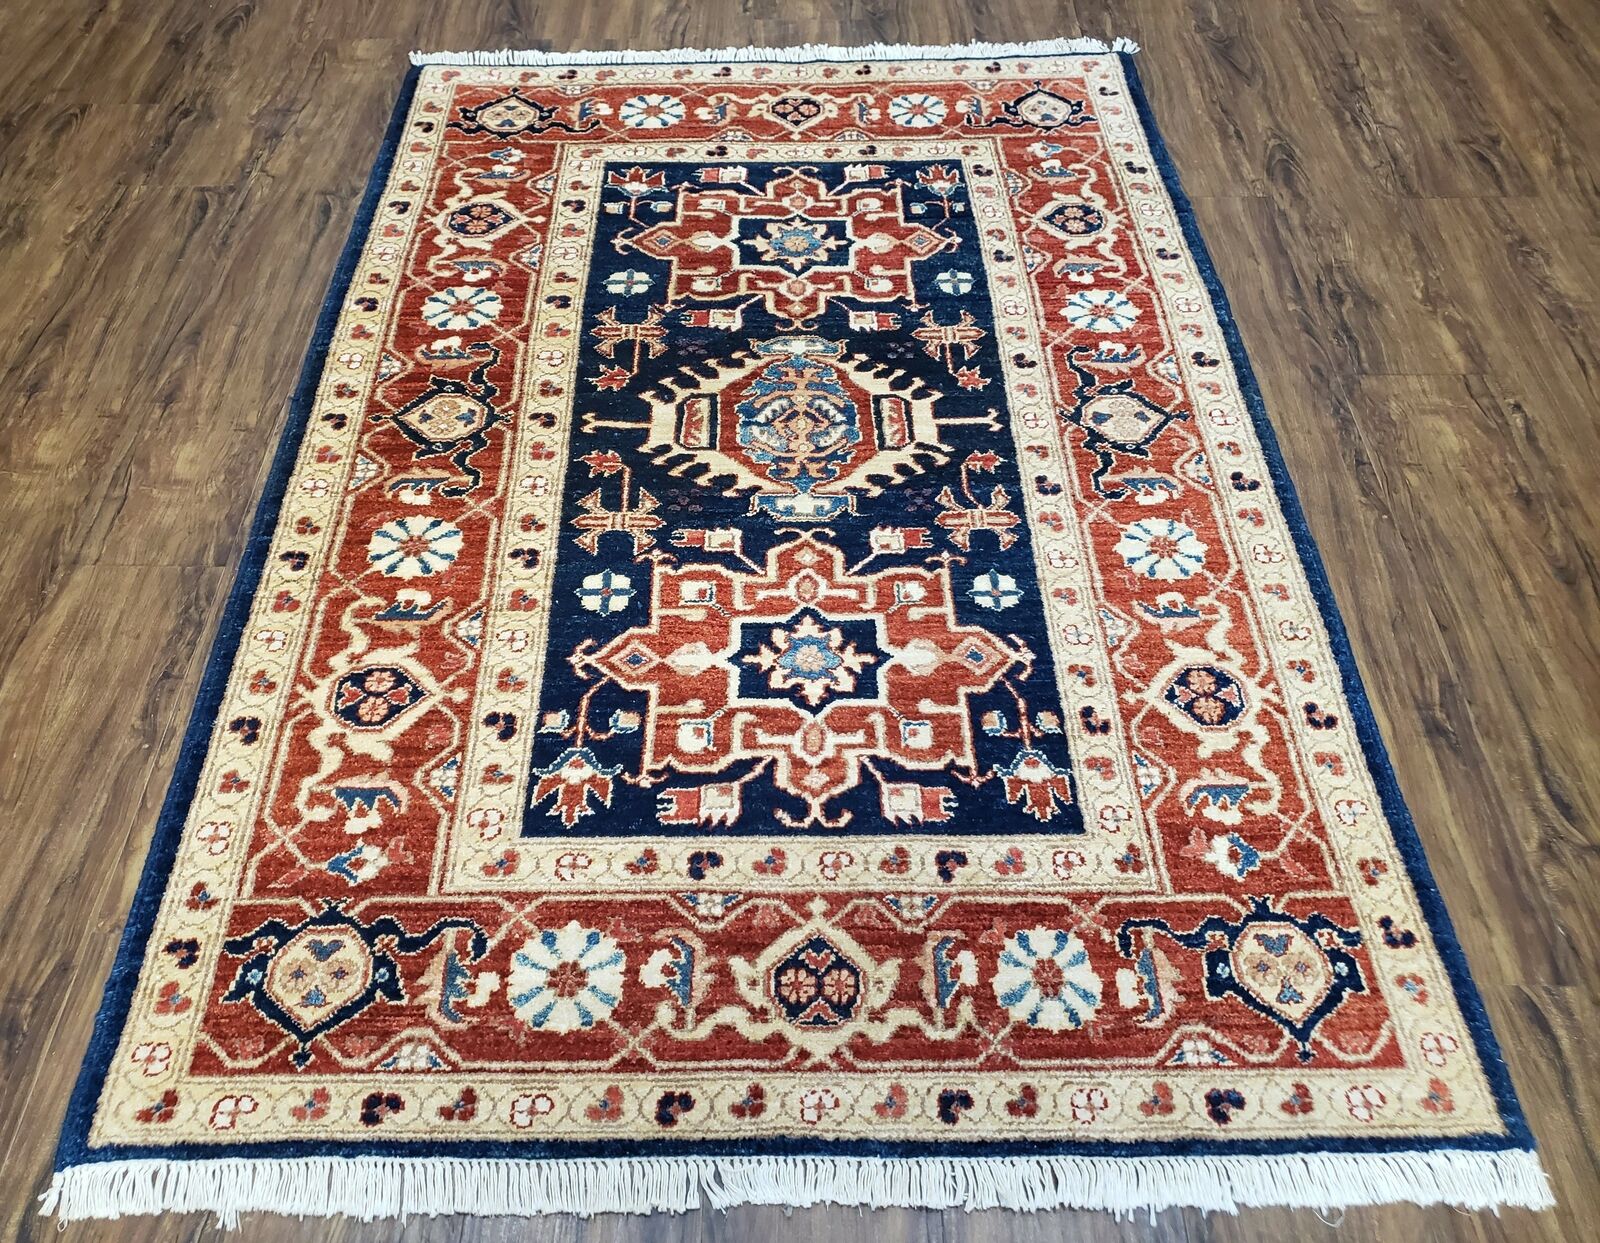 Vintage Turkish Area Rug 4x6 Wool Handmade Red & Blue Oriental Decorative Carpet